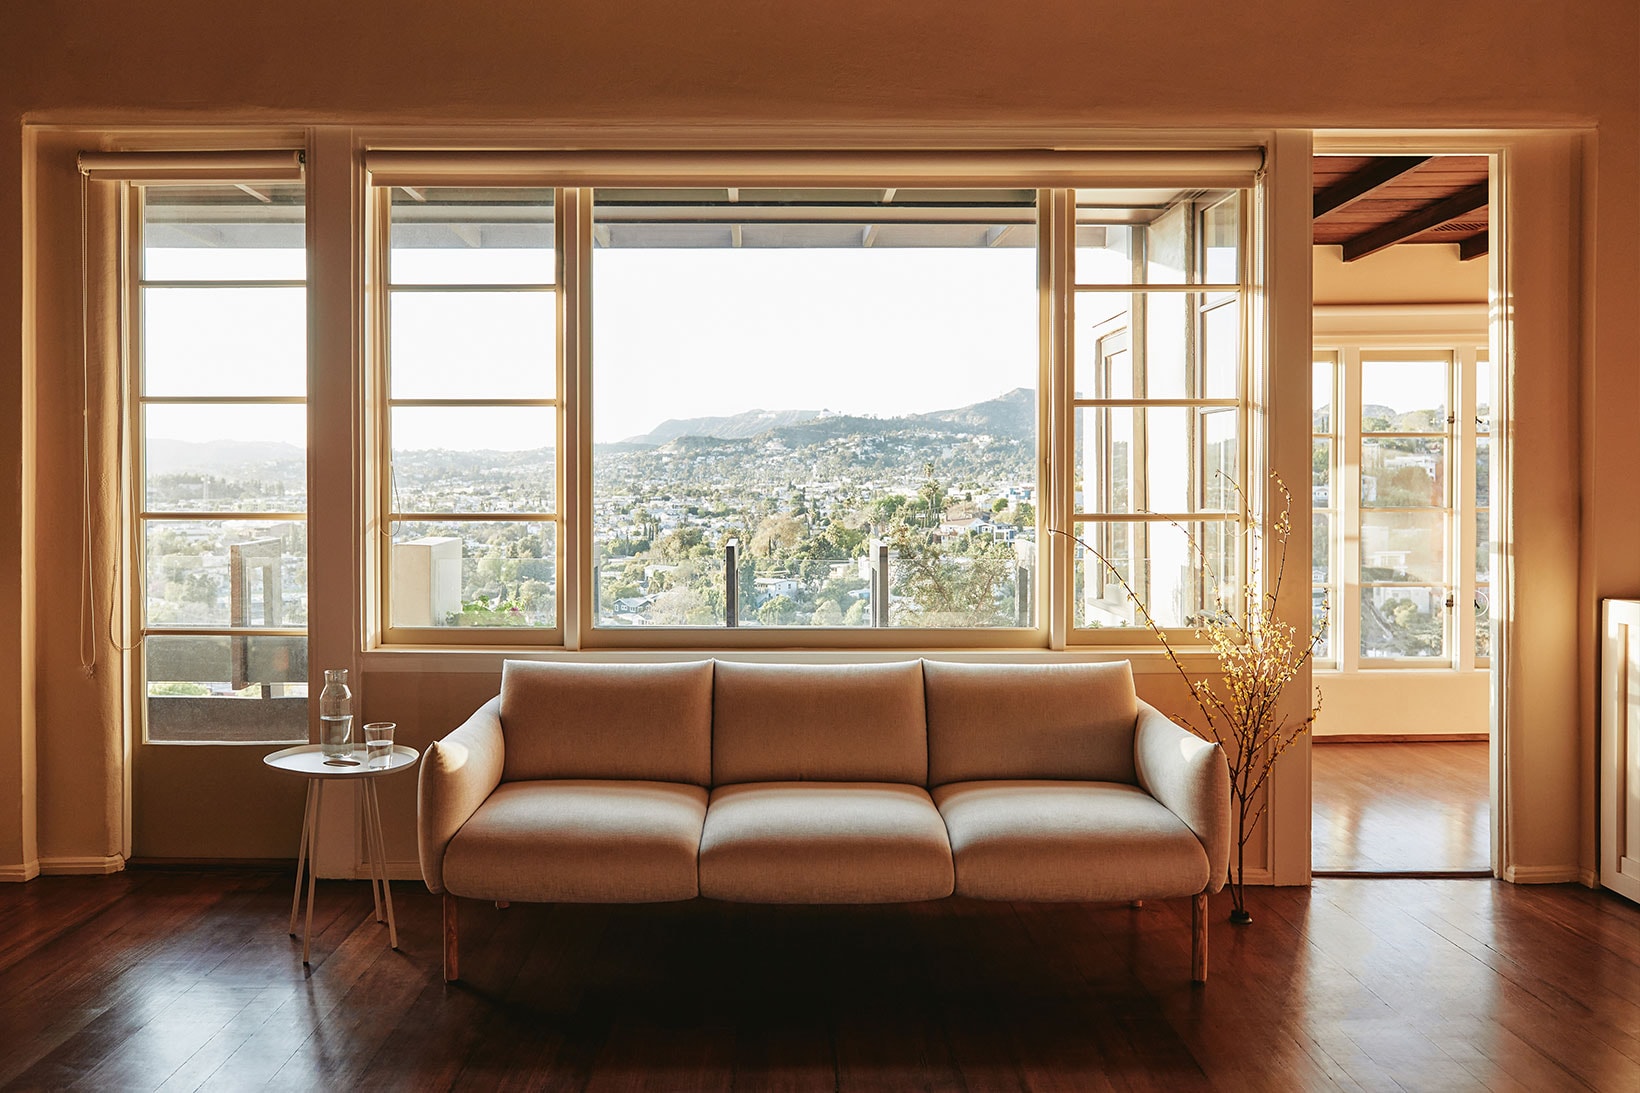 dims sofa couch furniture design alfa window living room home interior